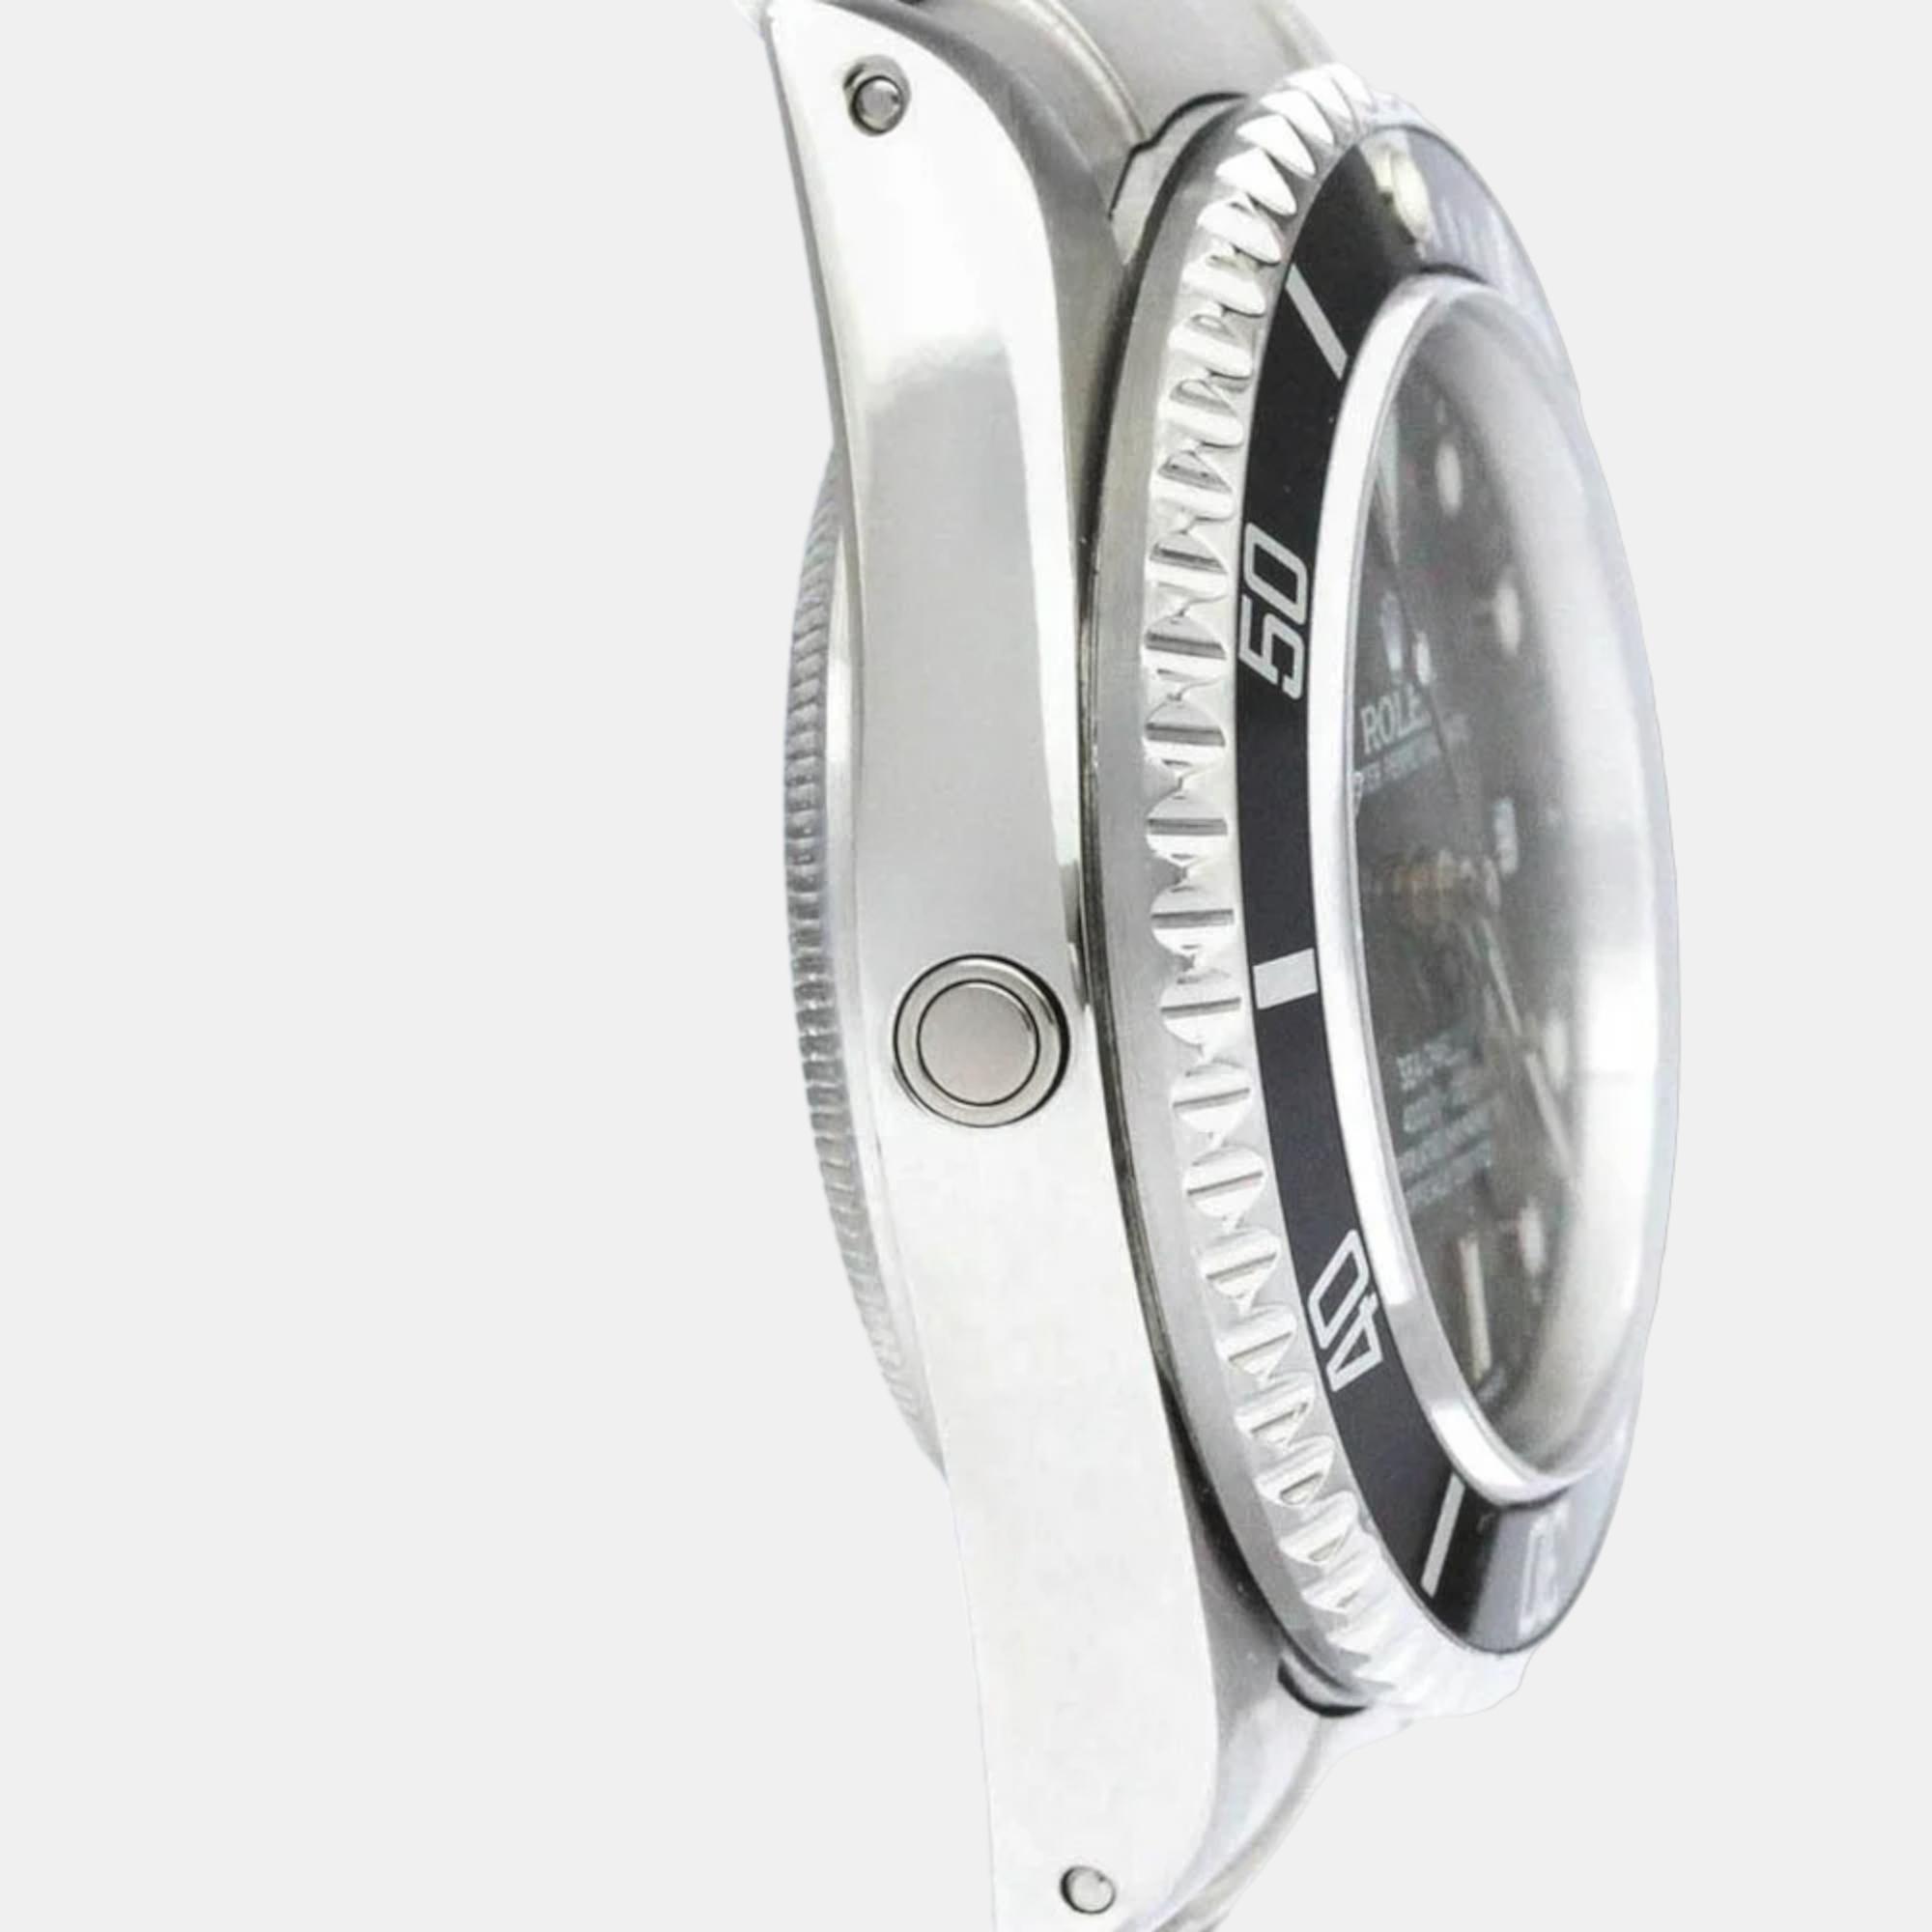 Rolex Black Stainless Steel Sea-Dweller 16660 Automatic Men's Wristwatch 40 Mm